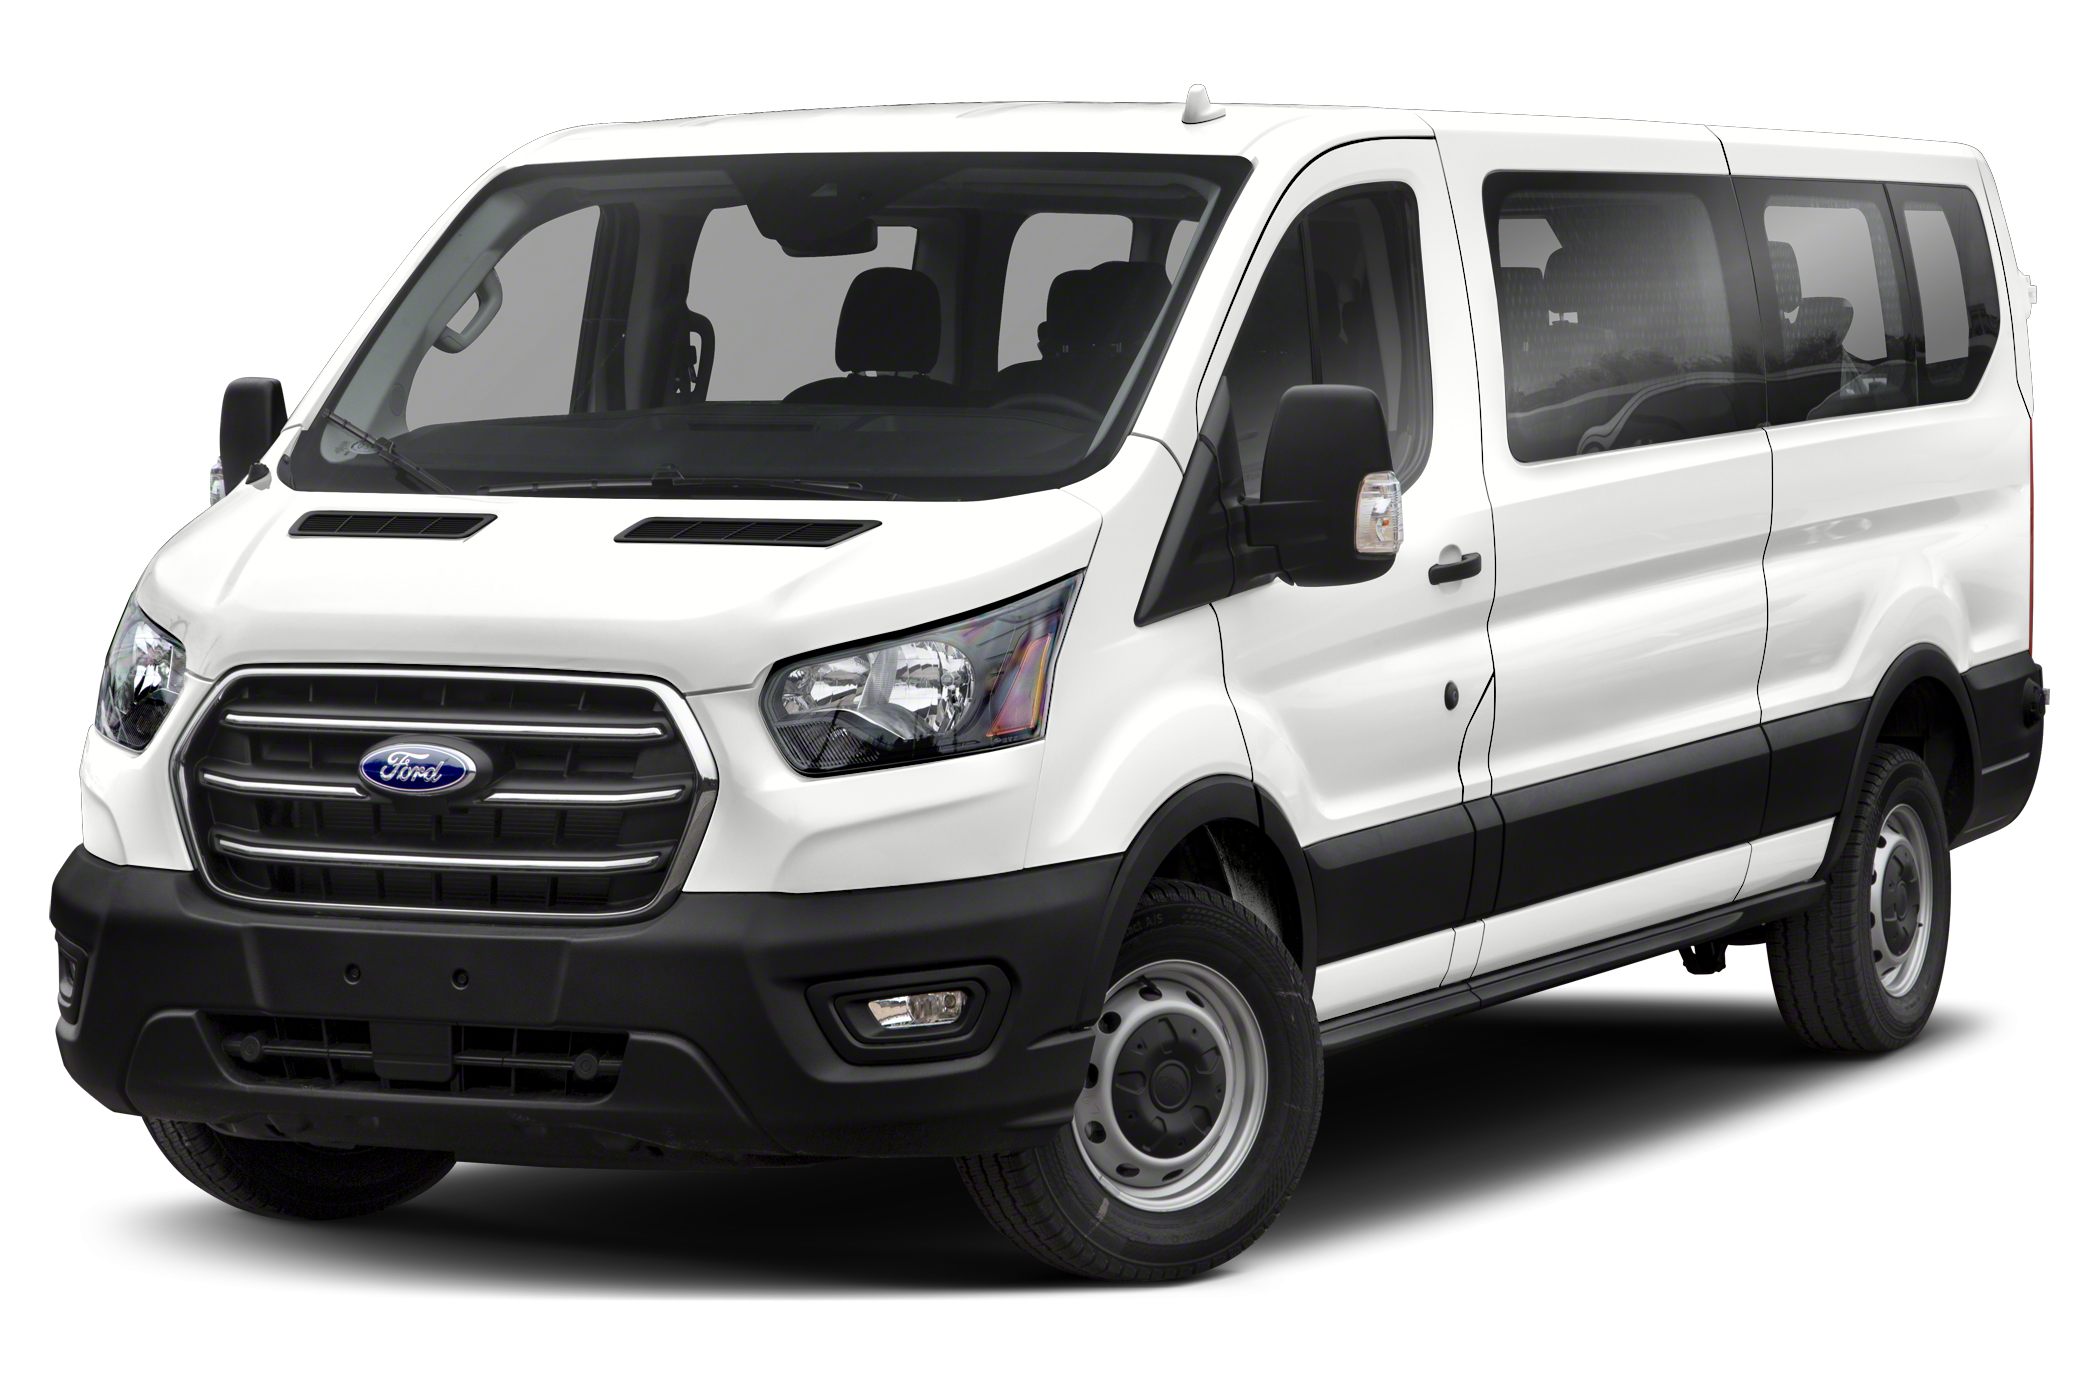 Ford Transit 150 Passenger Van Flash Sales, SAVE 31% - aveclumiere.com